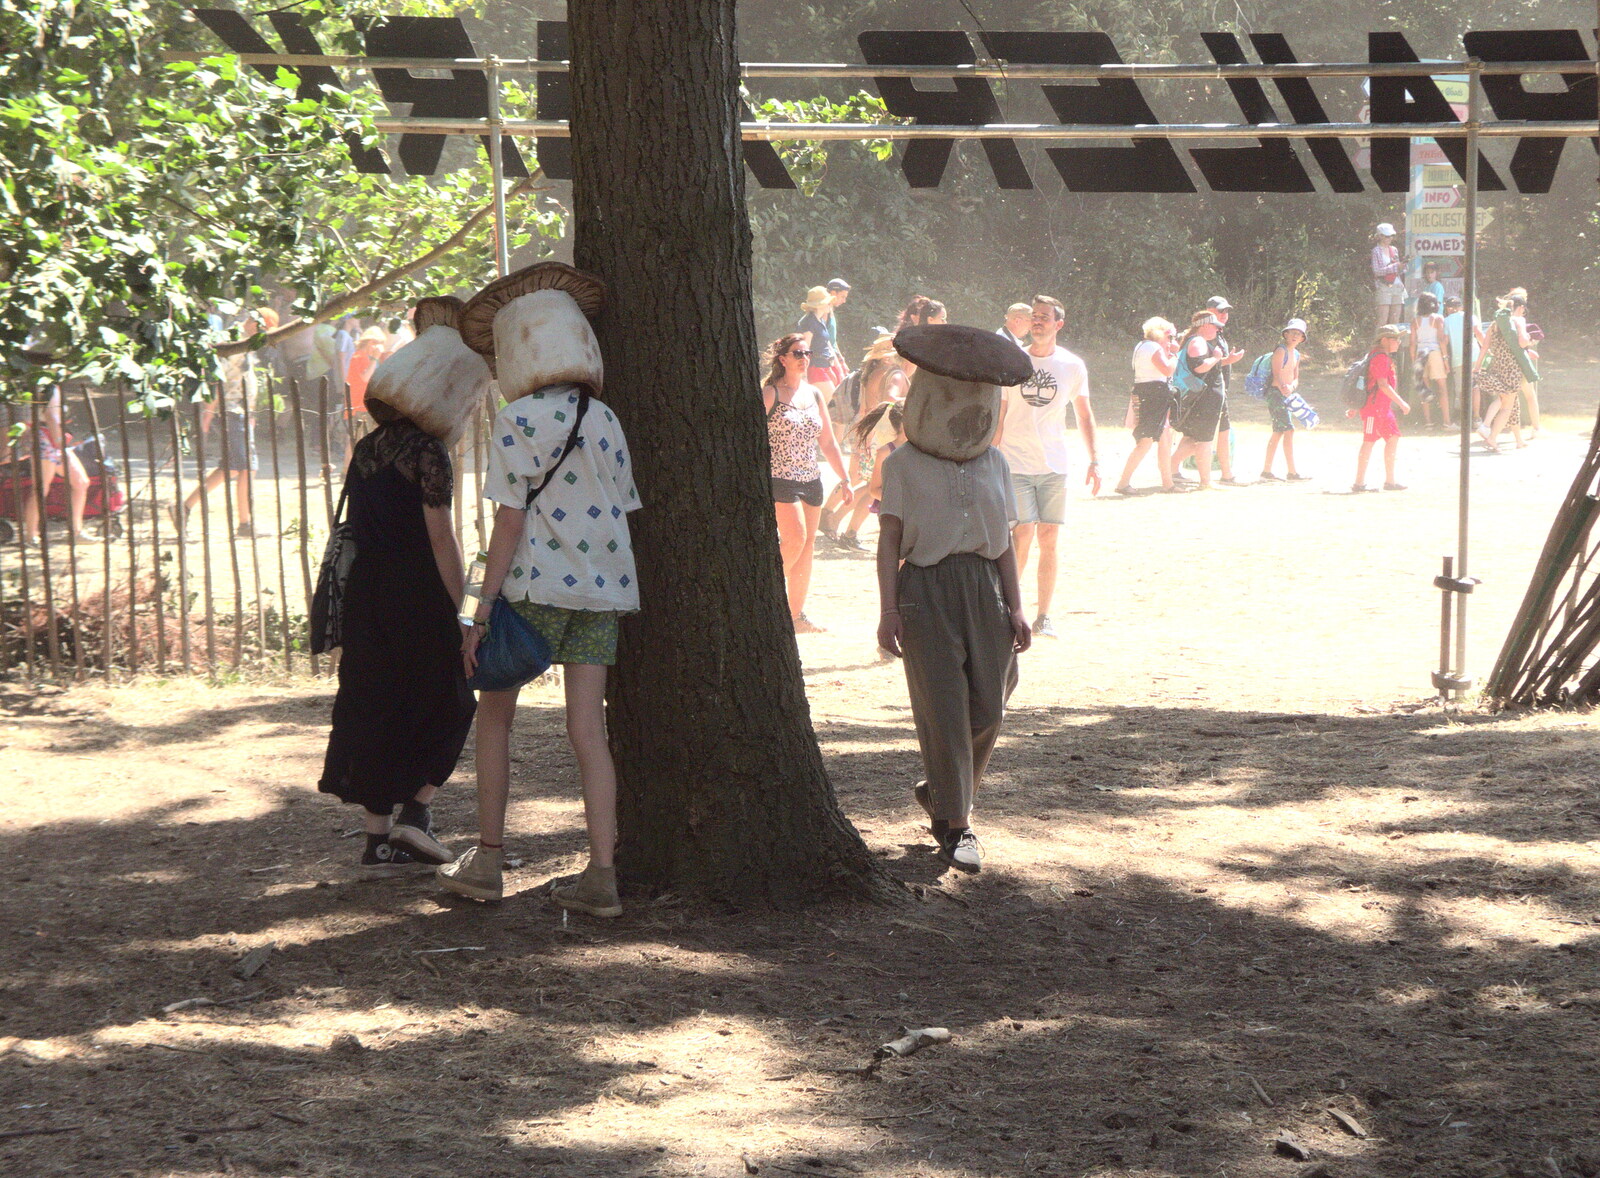 A Day at Latitude, Henham Park, Suffolk - 24th July 2022: People walk around trees with mushroom heads